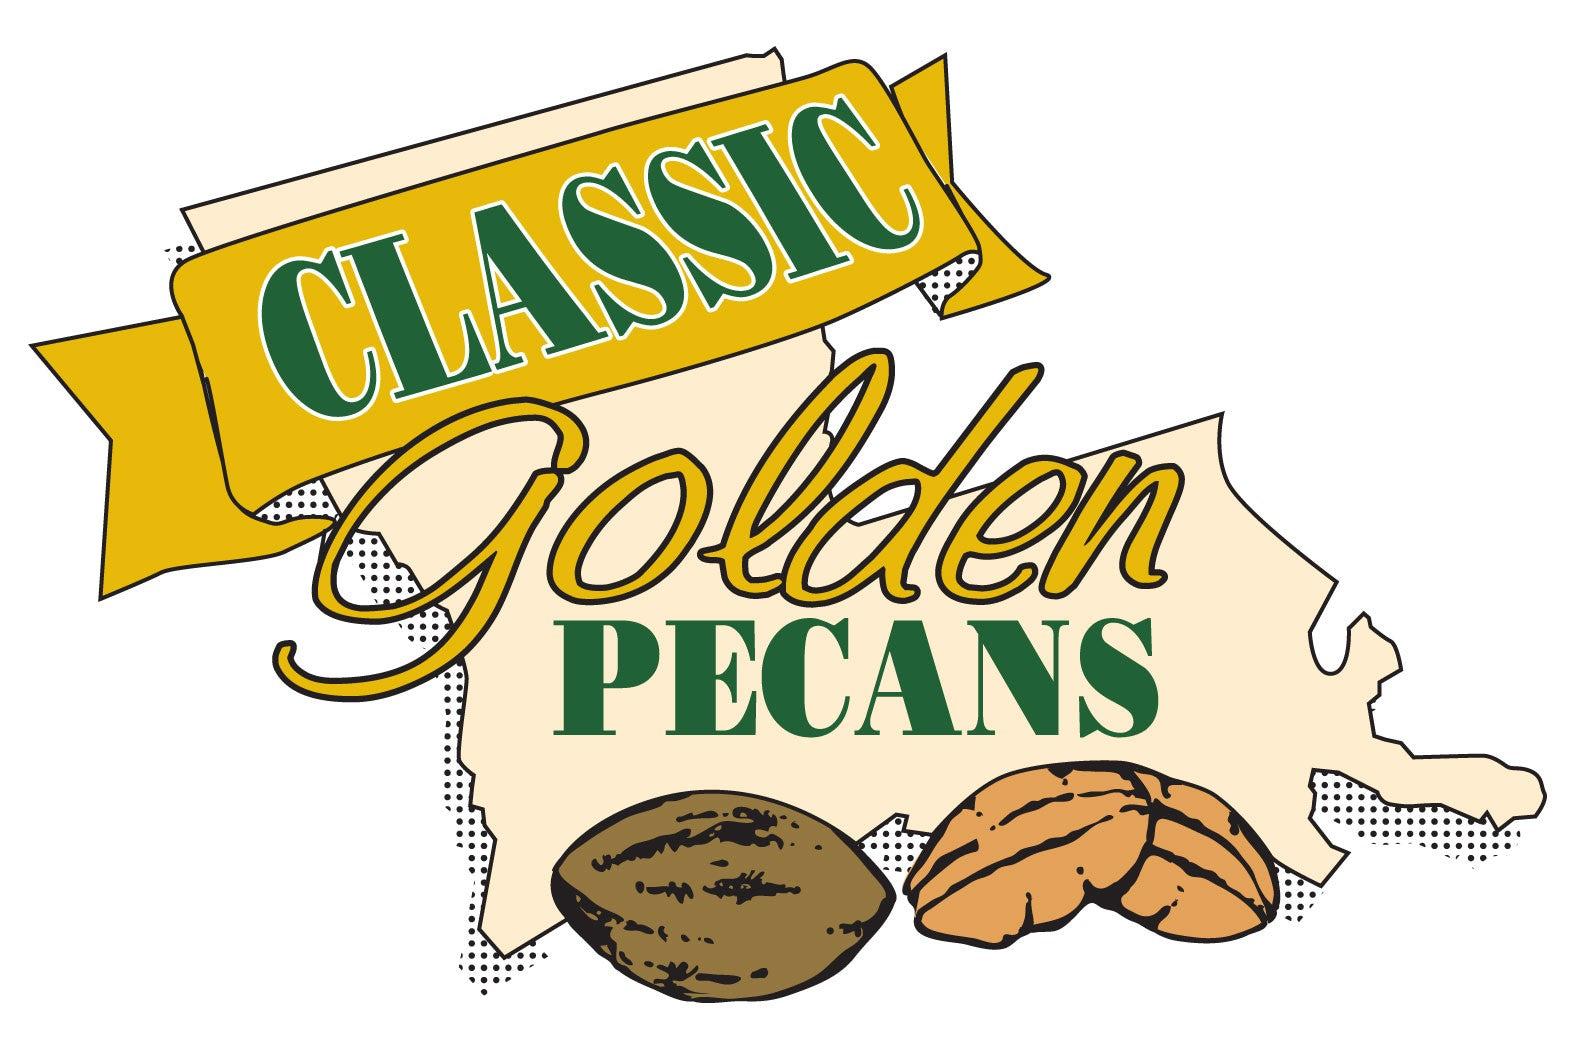 about-us-classic-golden-pecans